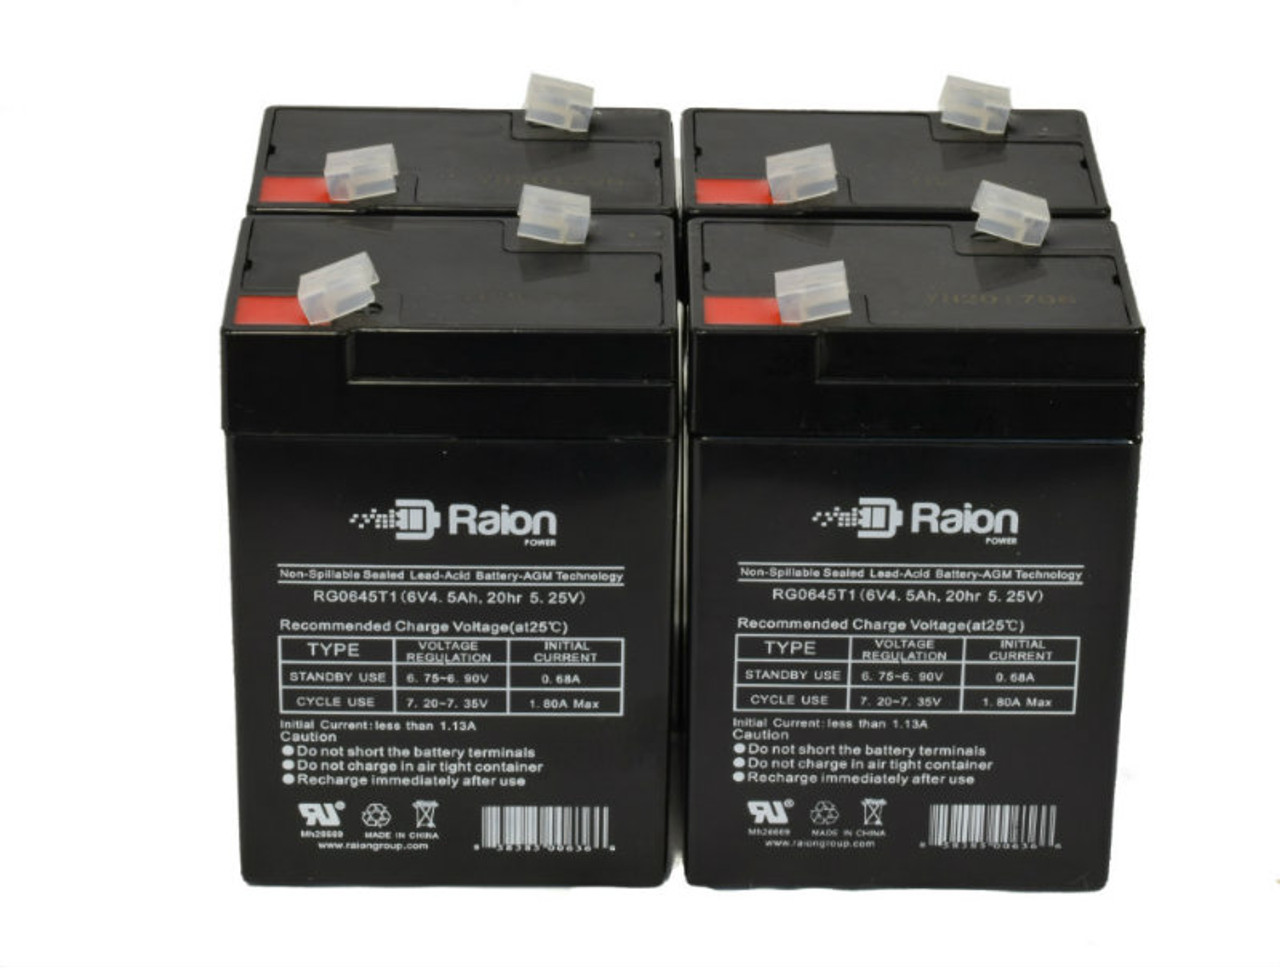 Raion Power 6V 4.5Ah Replacement Emergency Light Battery for Emergi-Lite M1860004 - 4 Pack